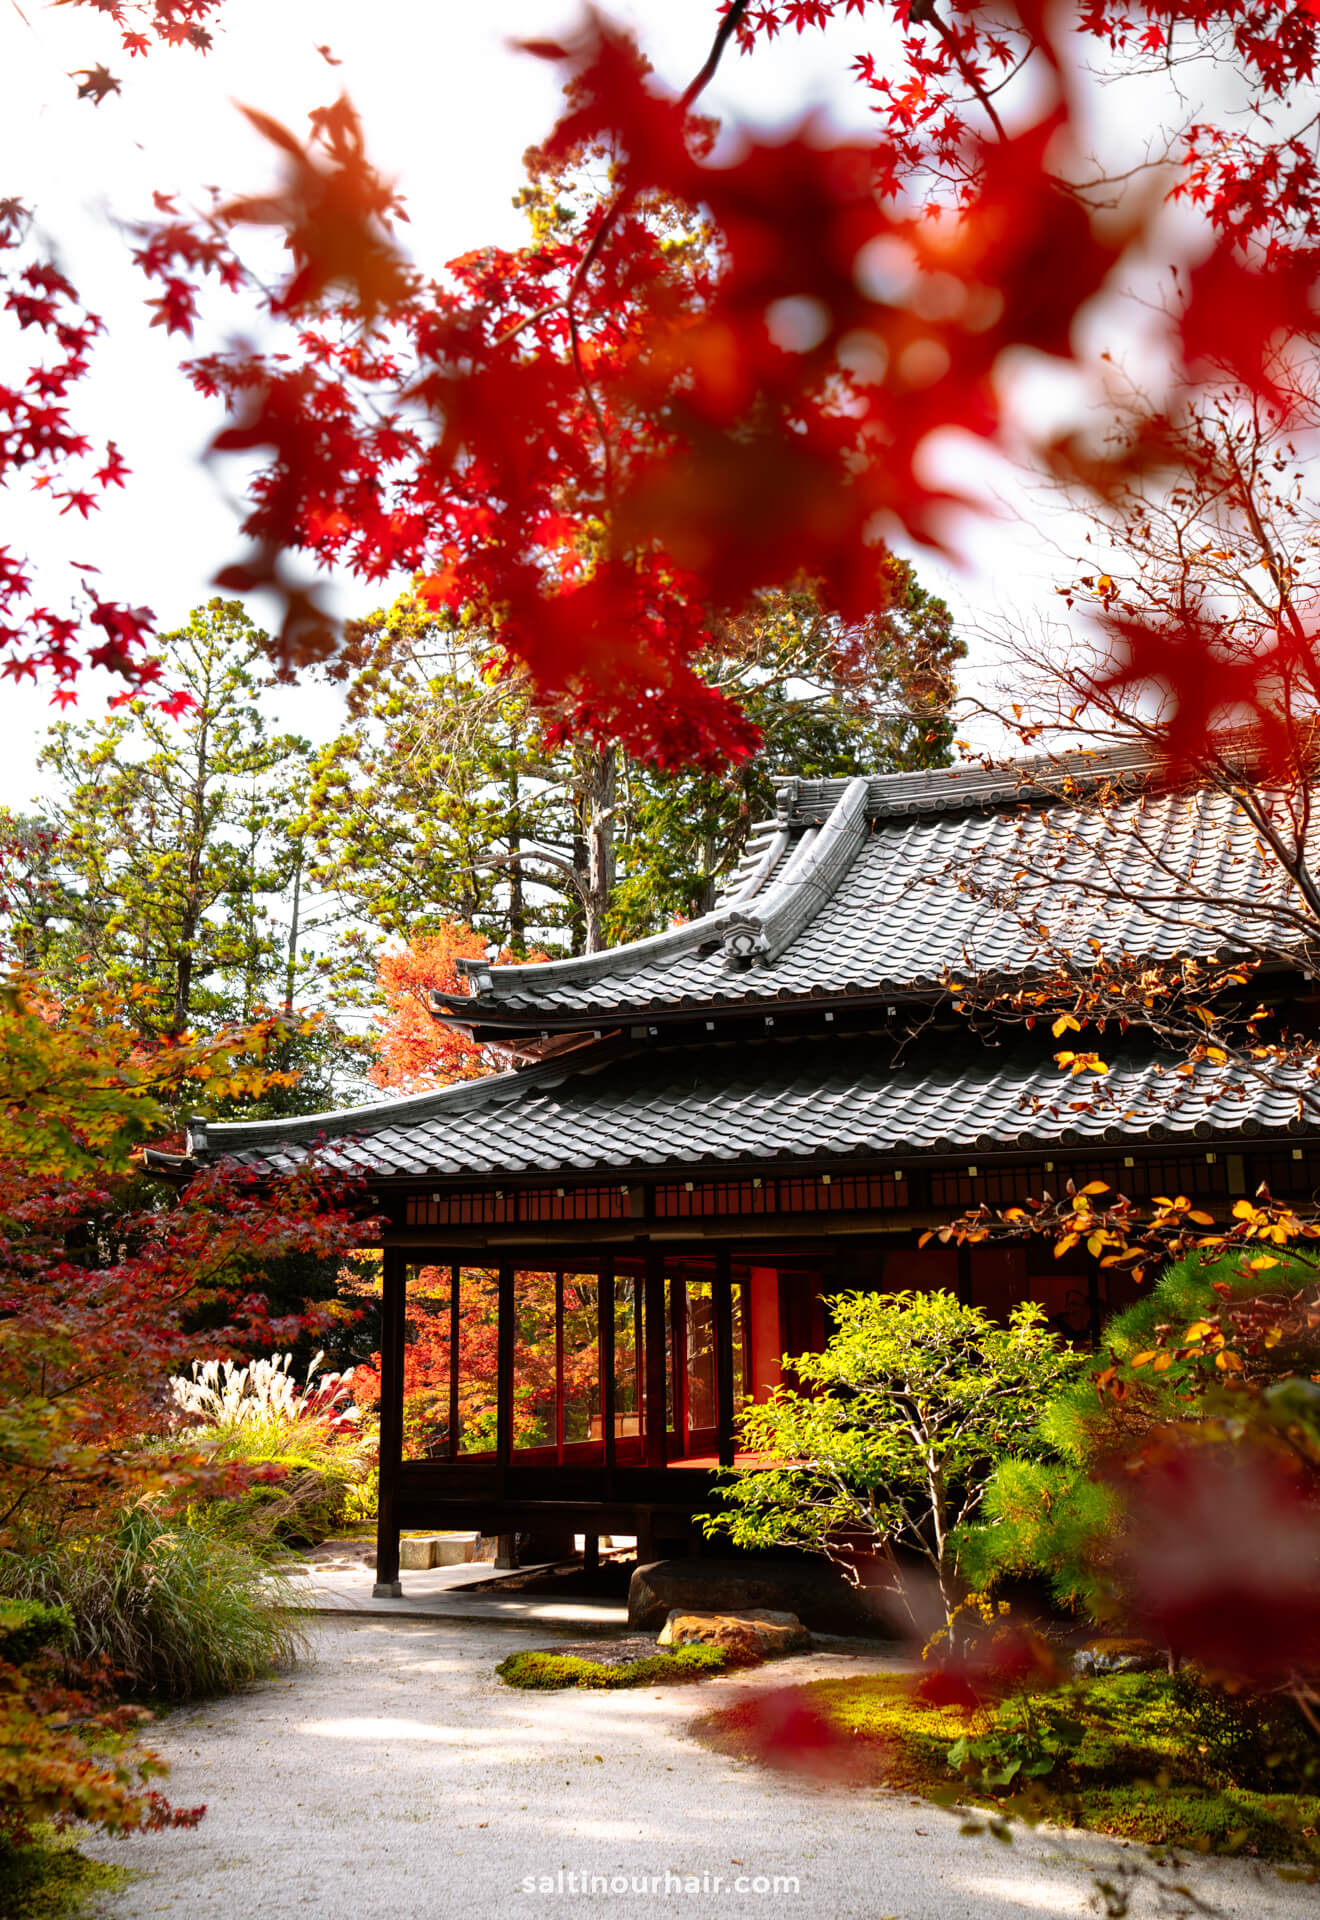 kyoto tourist locations